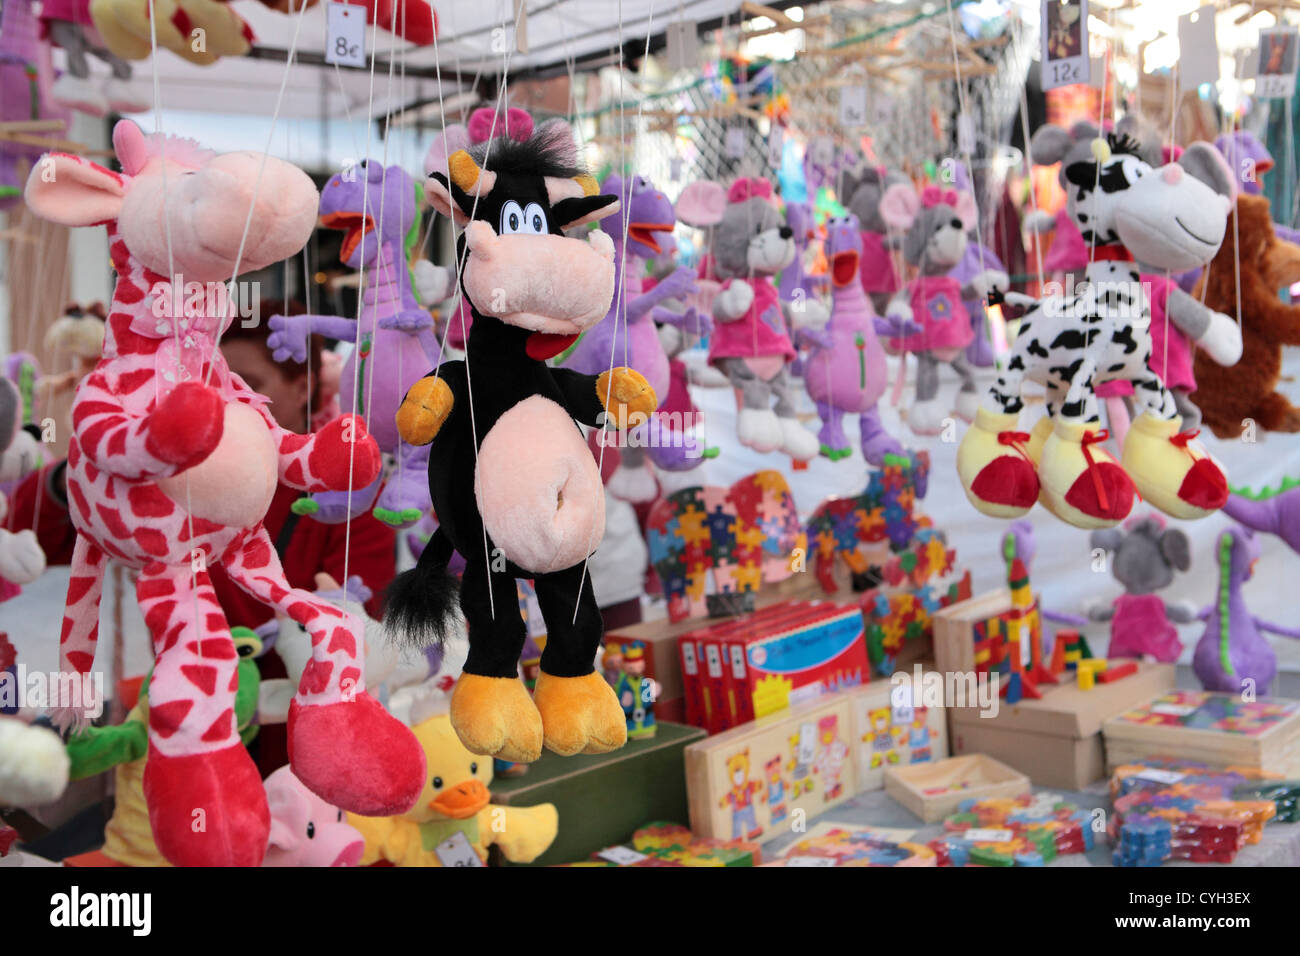 Puppets & children's toys for sale pavement stall El Rastro Sunday street market, Madrid, Spain. Stock Photo